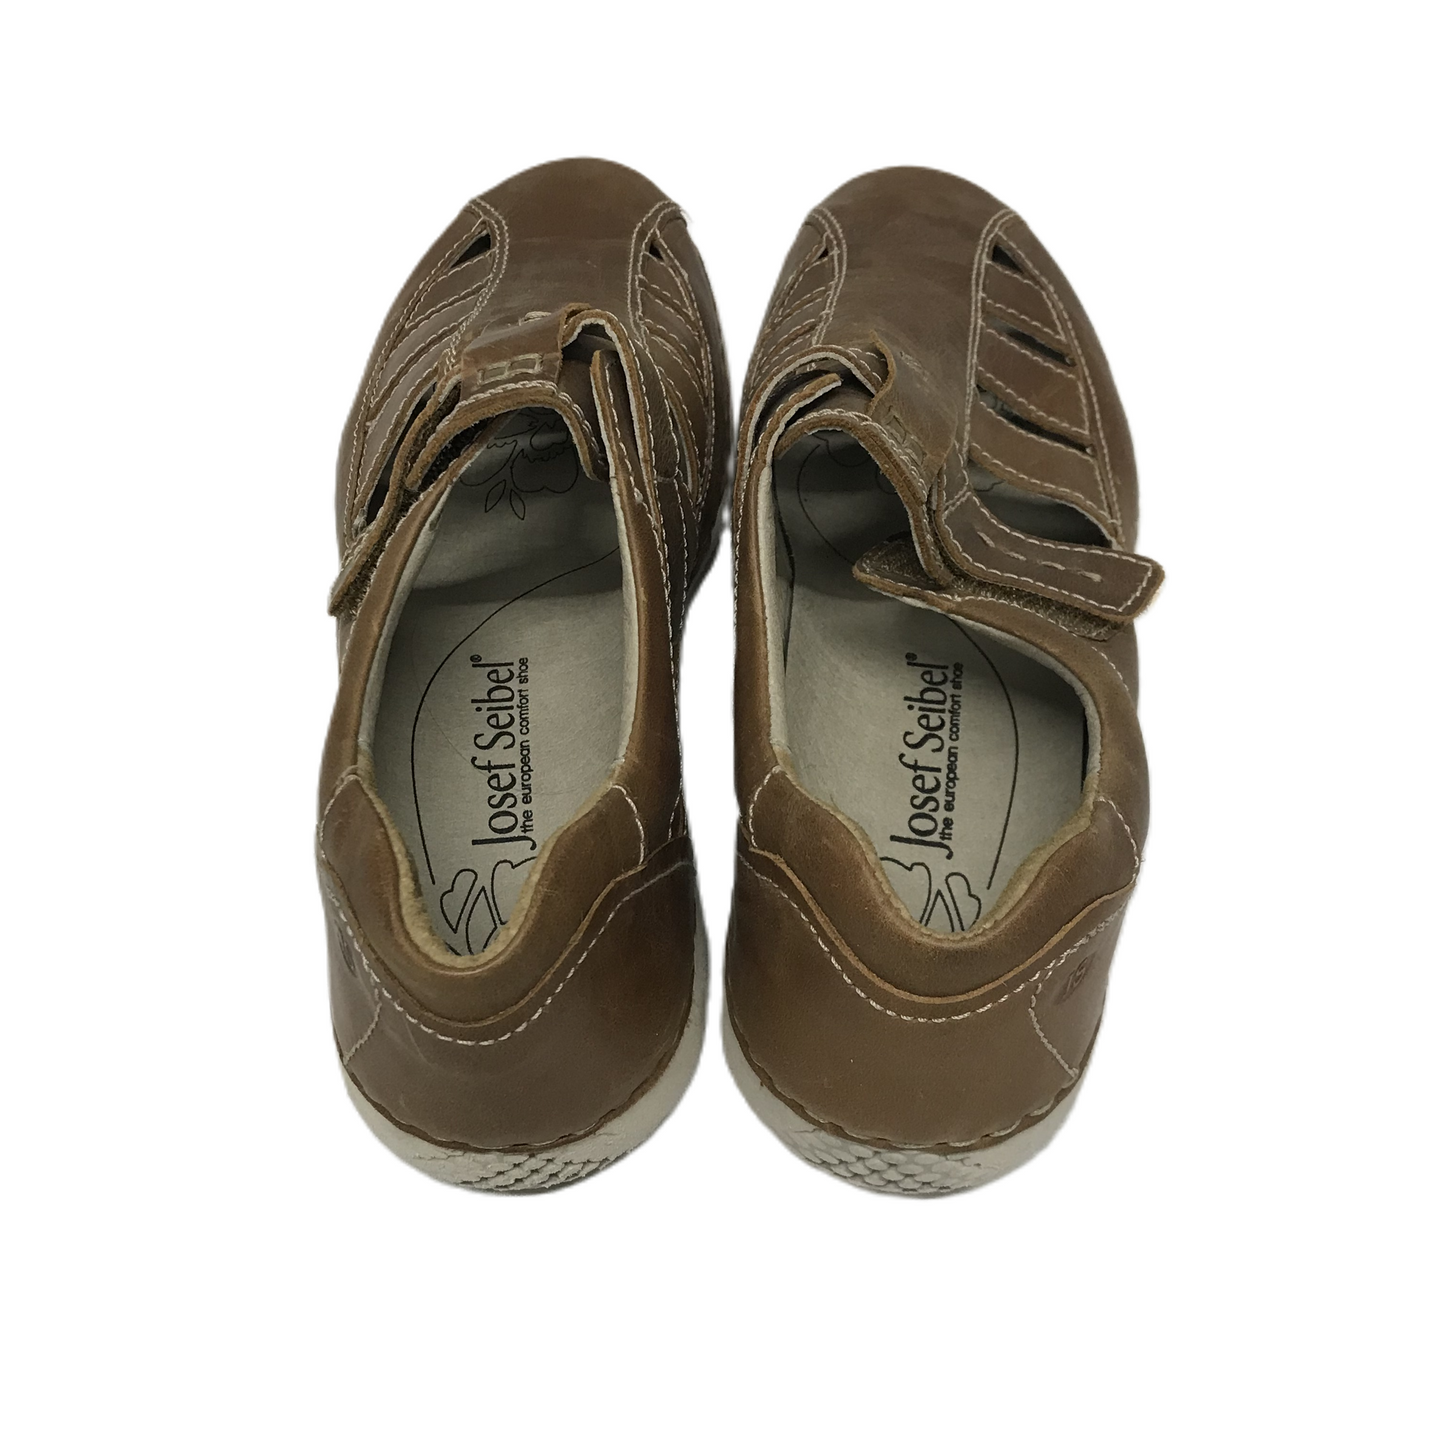 Tan Shoes Flats By Josef Seibel, Size: 9.5